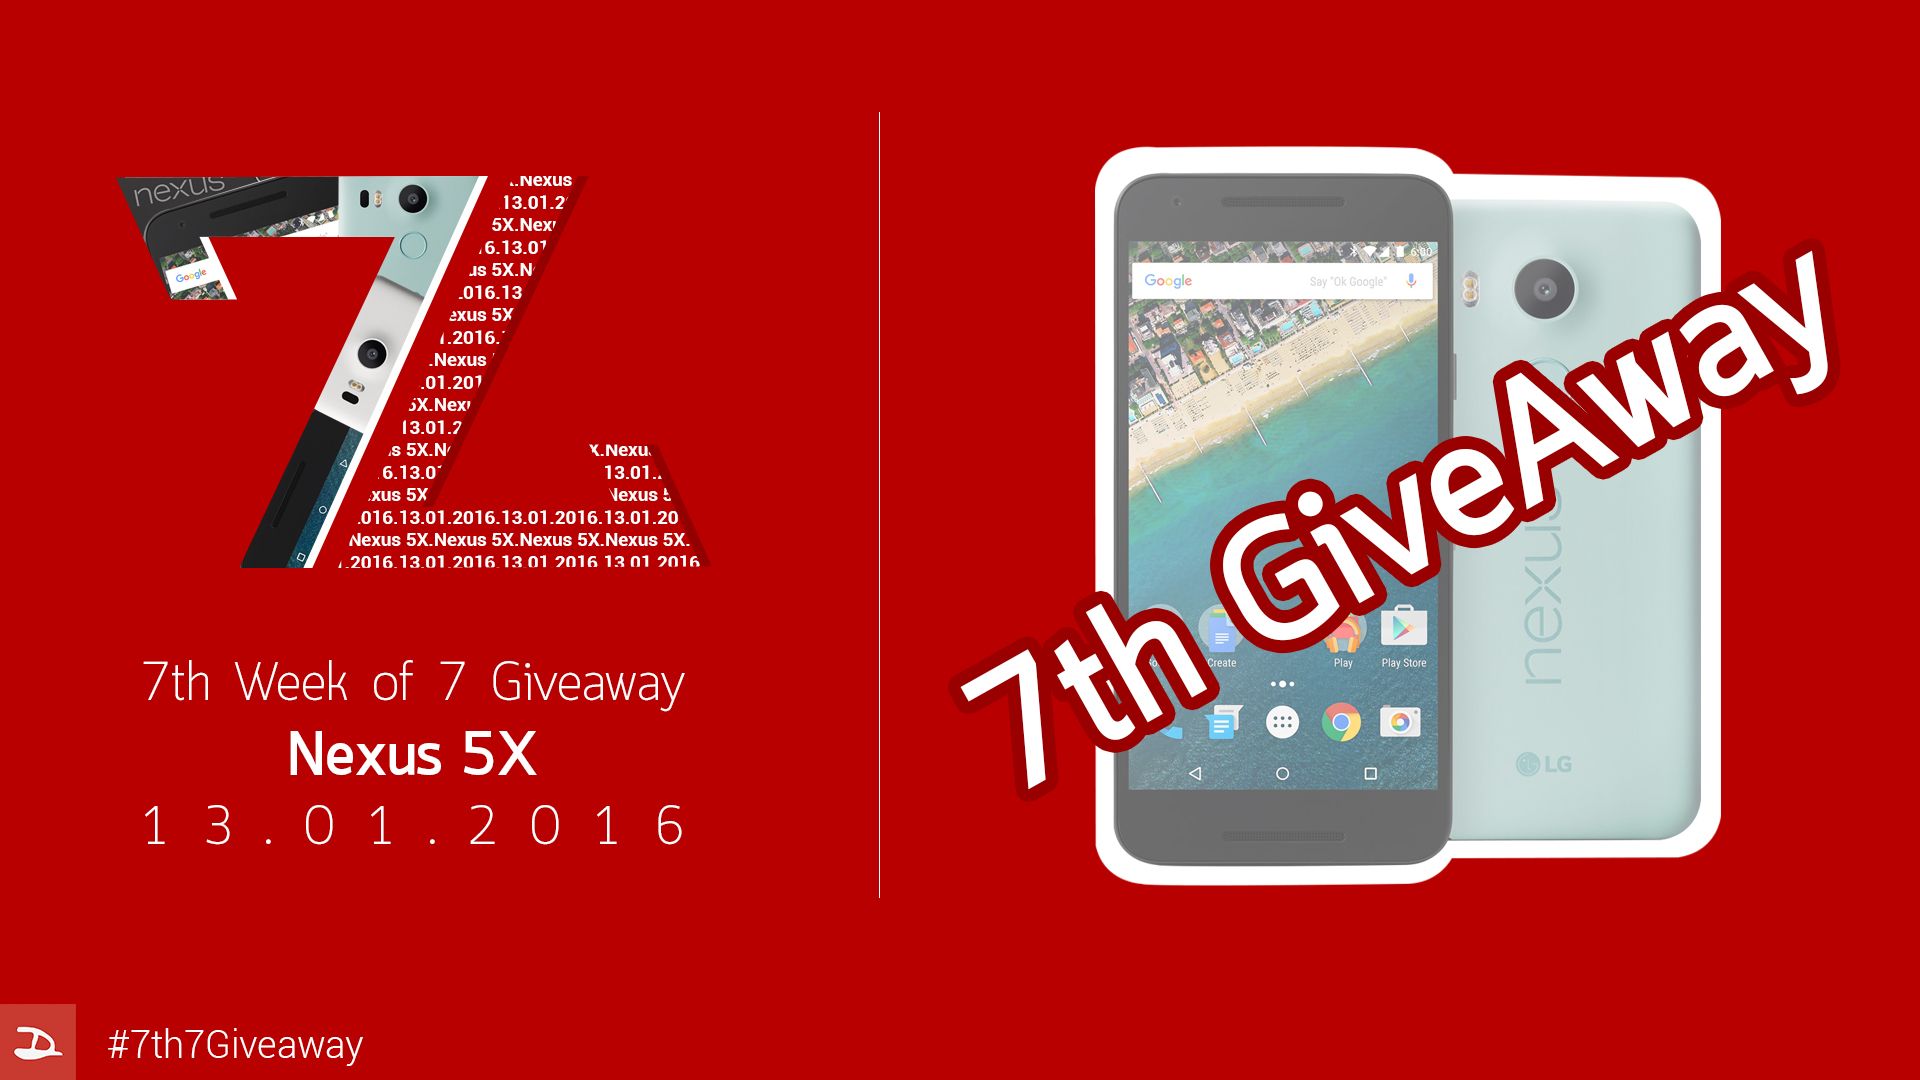 [Special Event] WK7 – ประกาศผลผู้โชคดีที่ได้รับ LG nexus 5X สมาร์ทโฟนเครื่องสุดท้ายในกิจกรรม 7 Give away